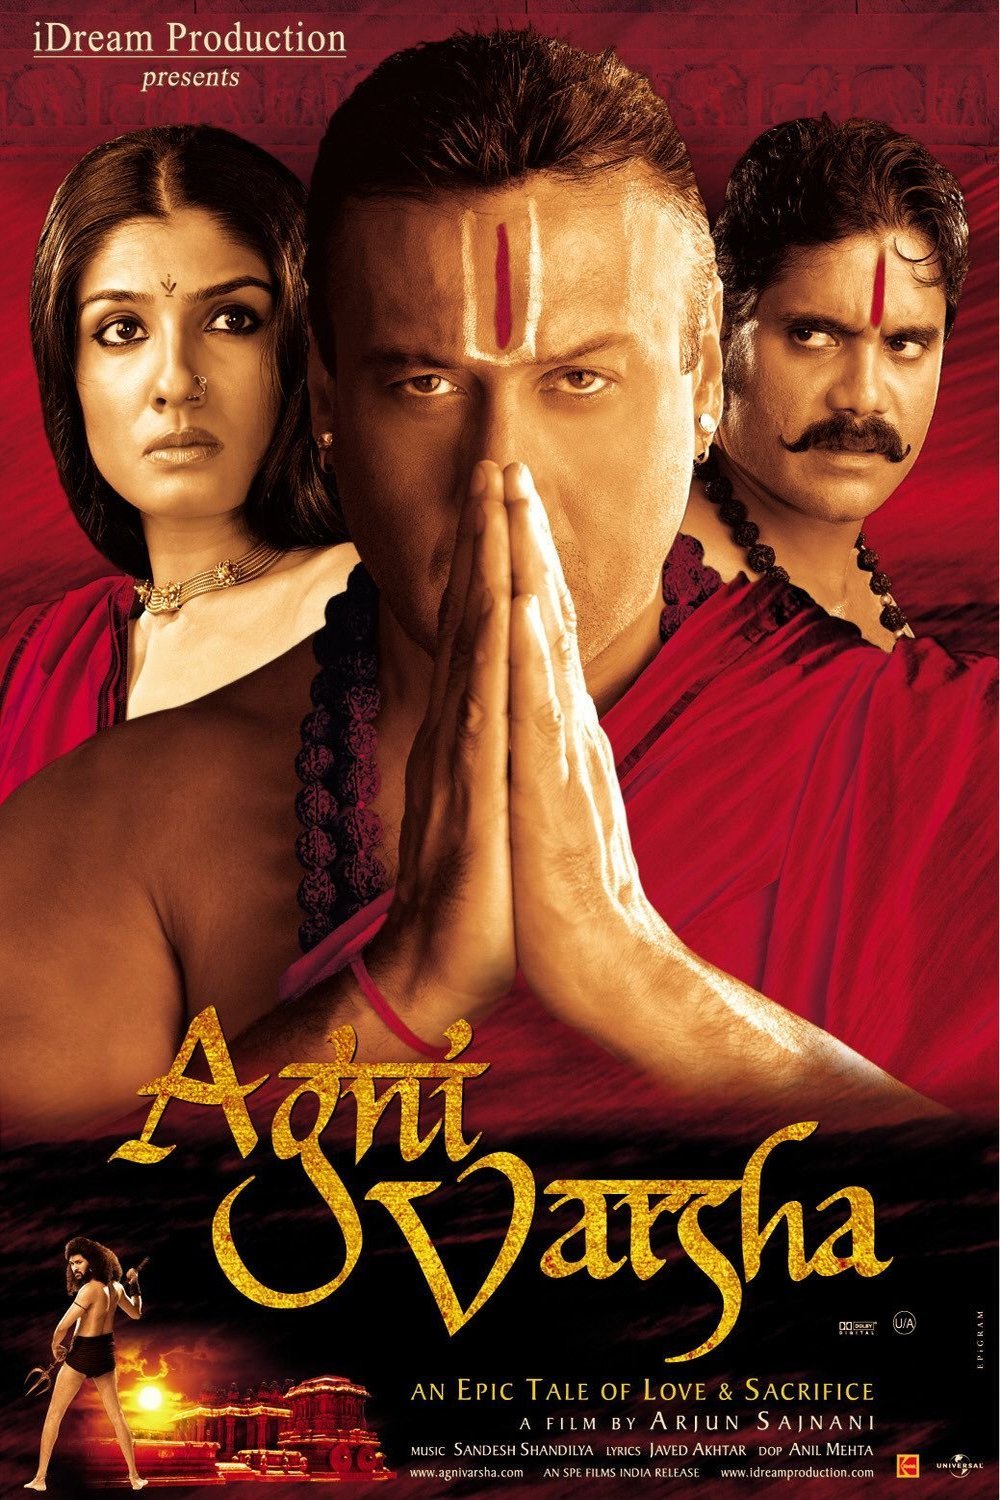 Hindi poster of the movie Agni Varsha